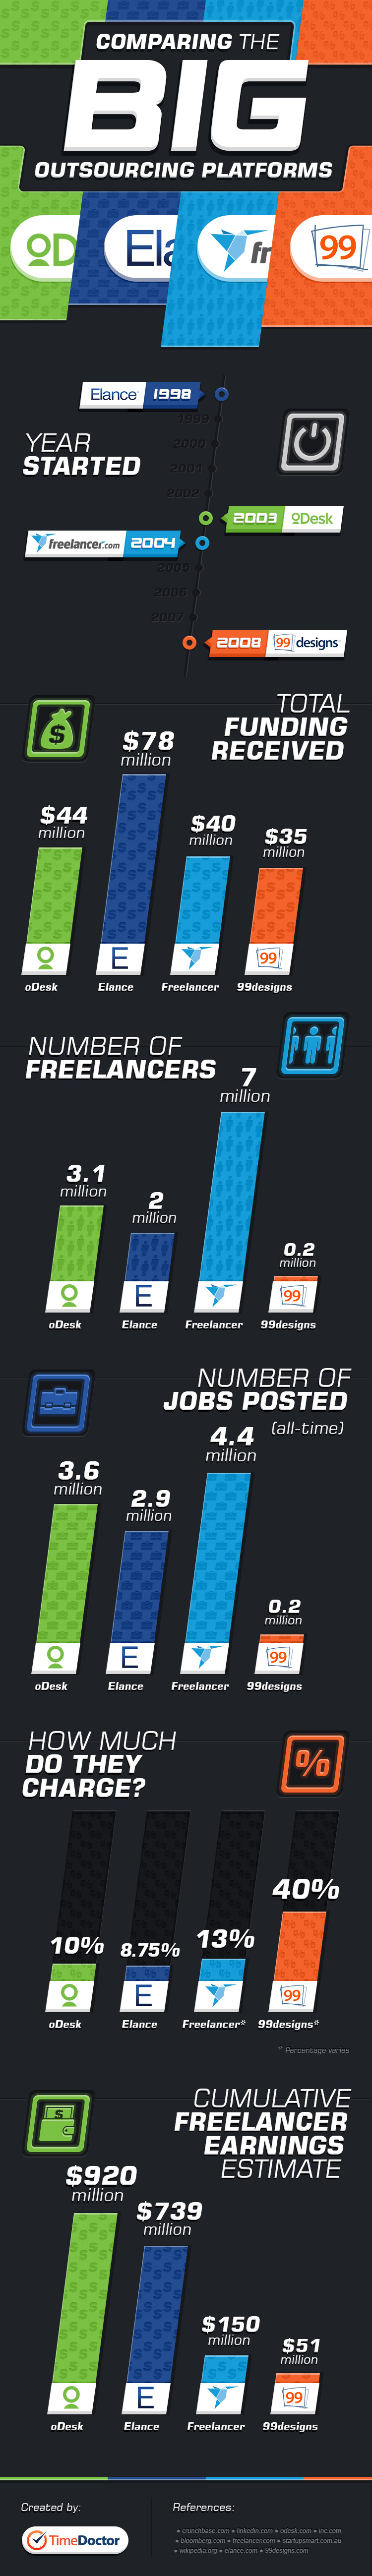 Upwork (formerly oDesk) vs Elance vs Freelancer and 99designs - Infographic